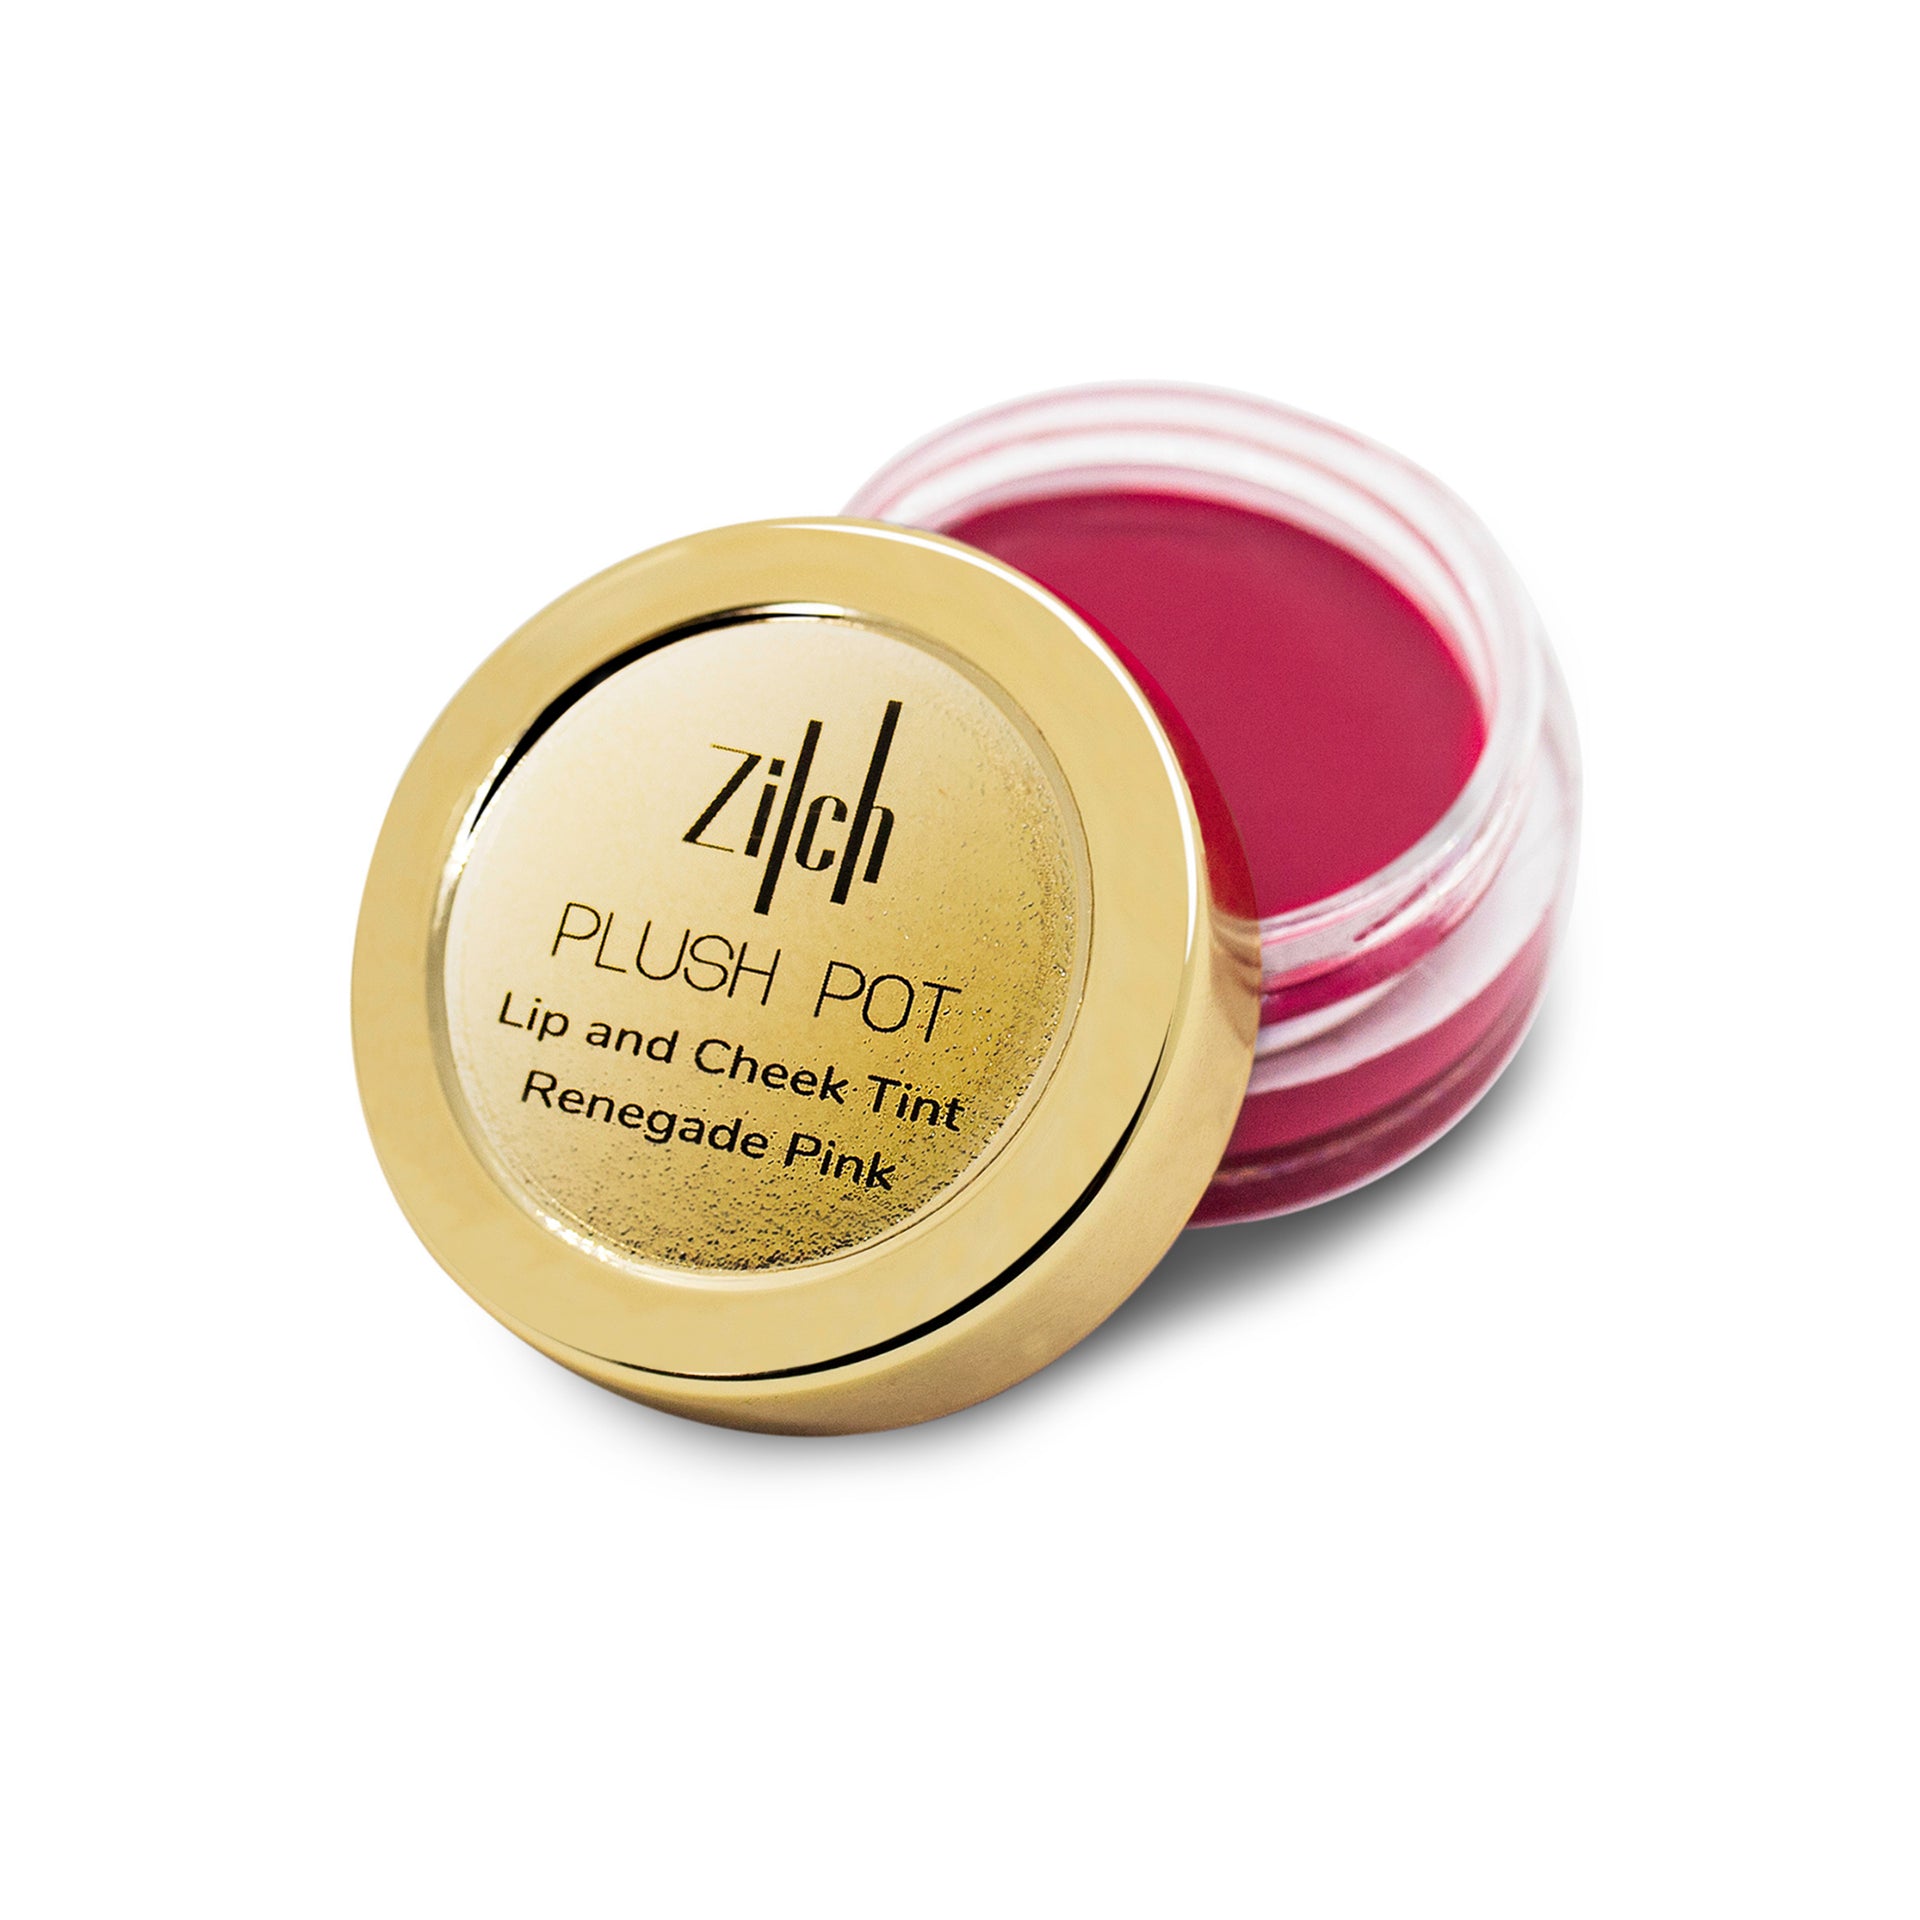 Plush Pot Lip and Cheek Tint in Renegade Pink